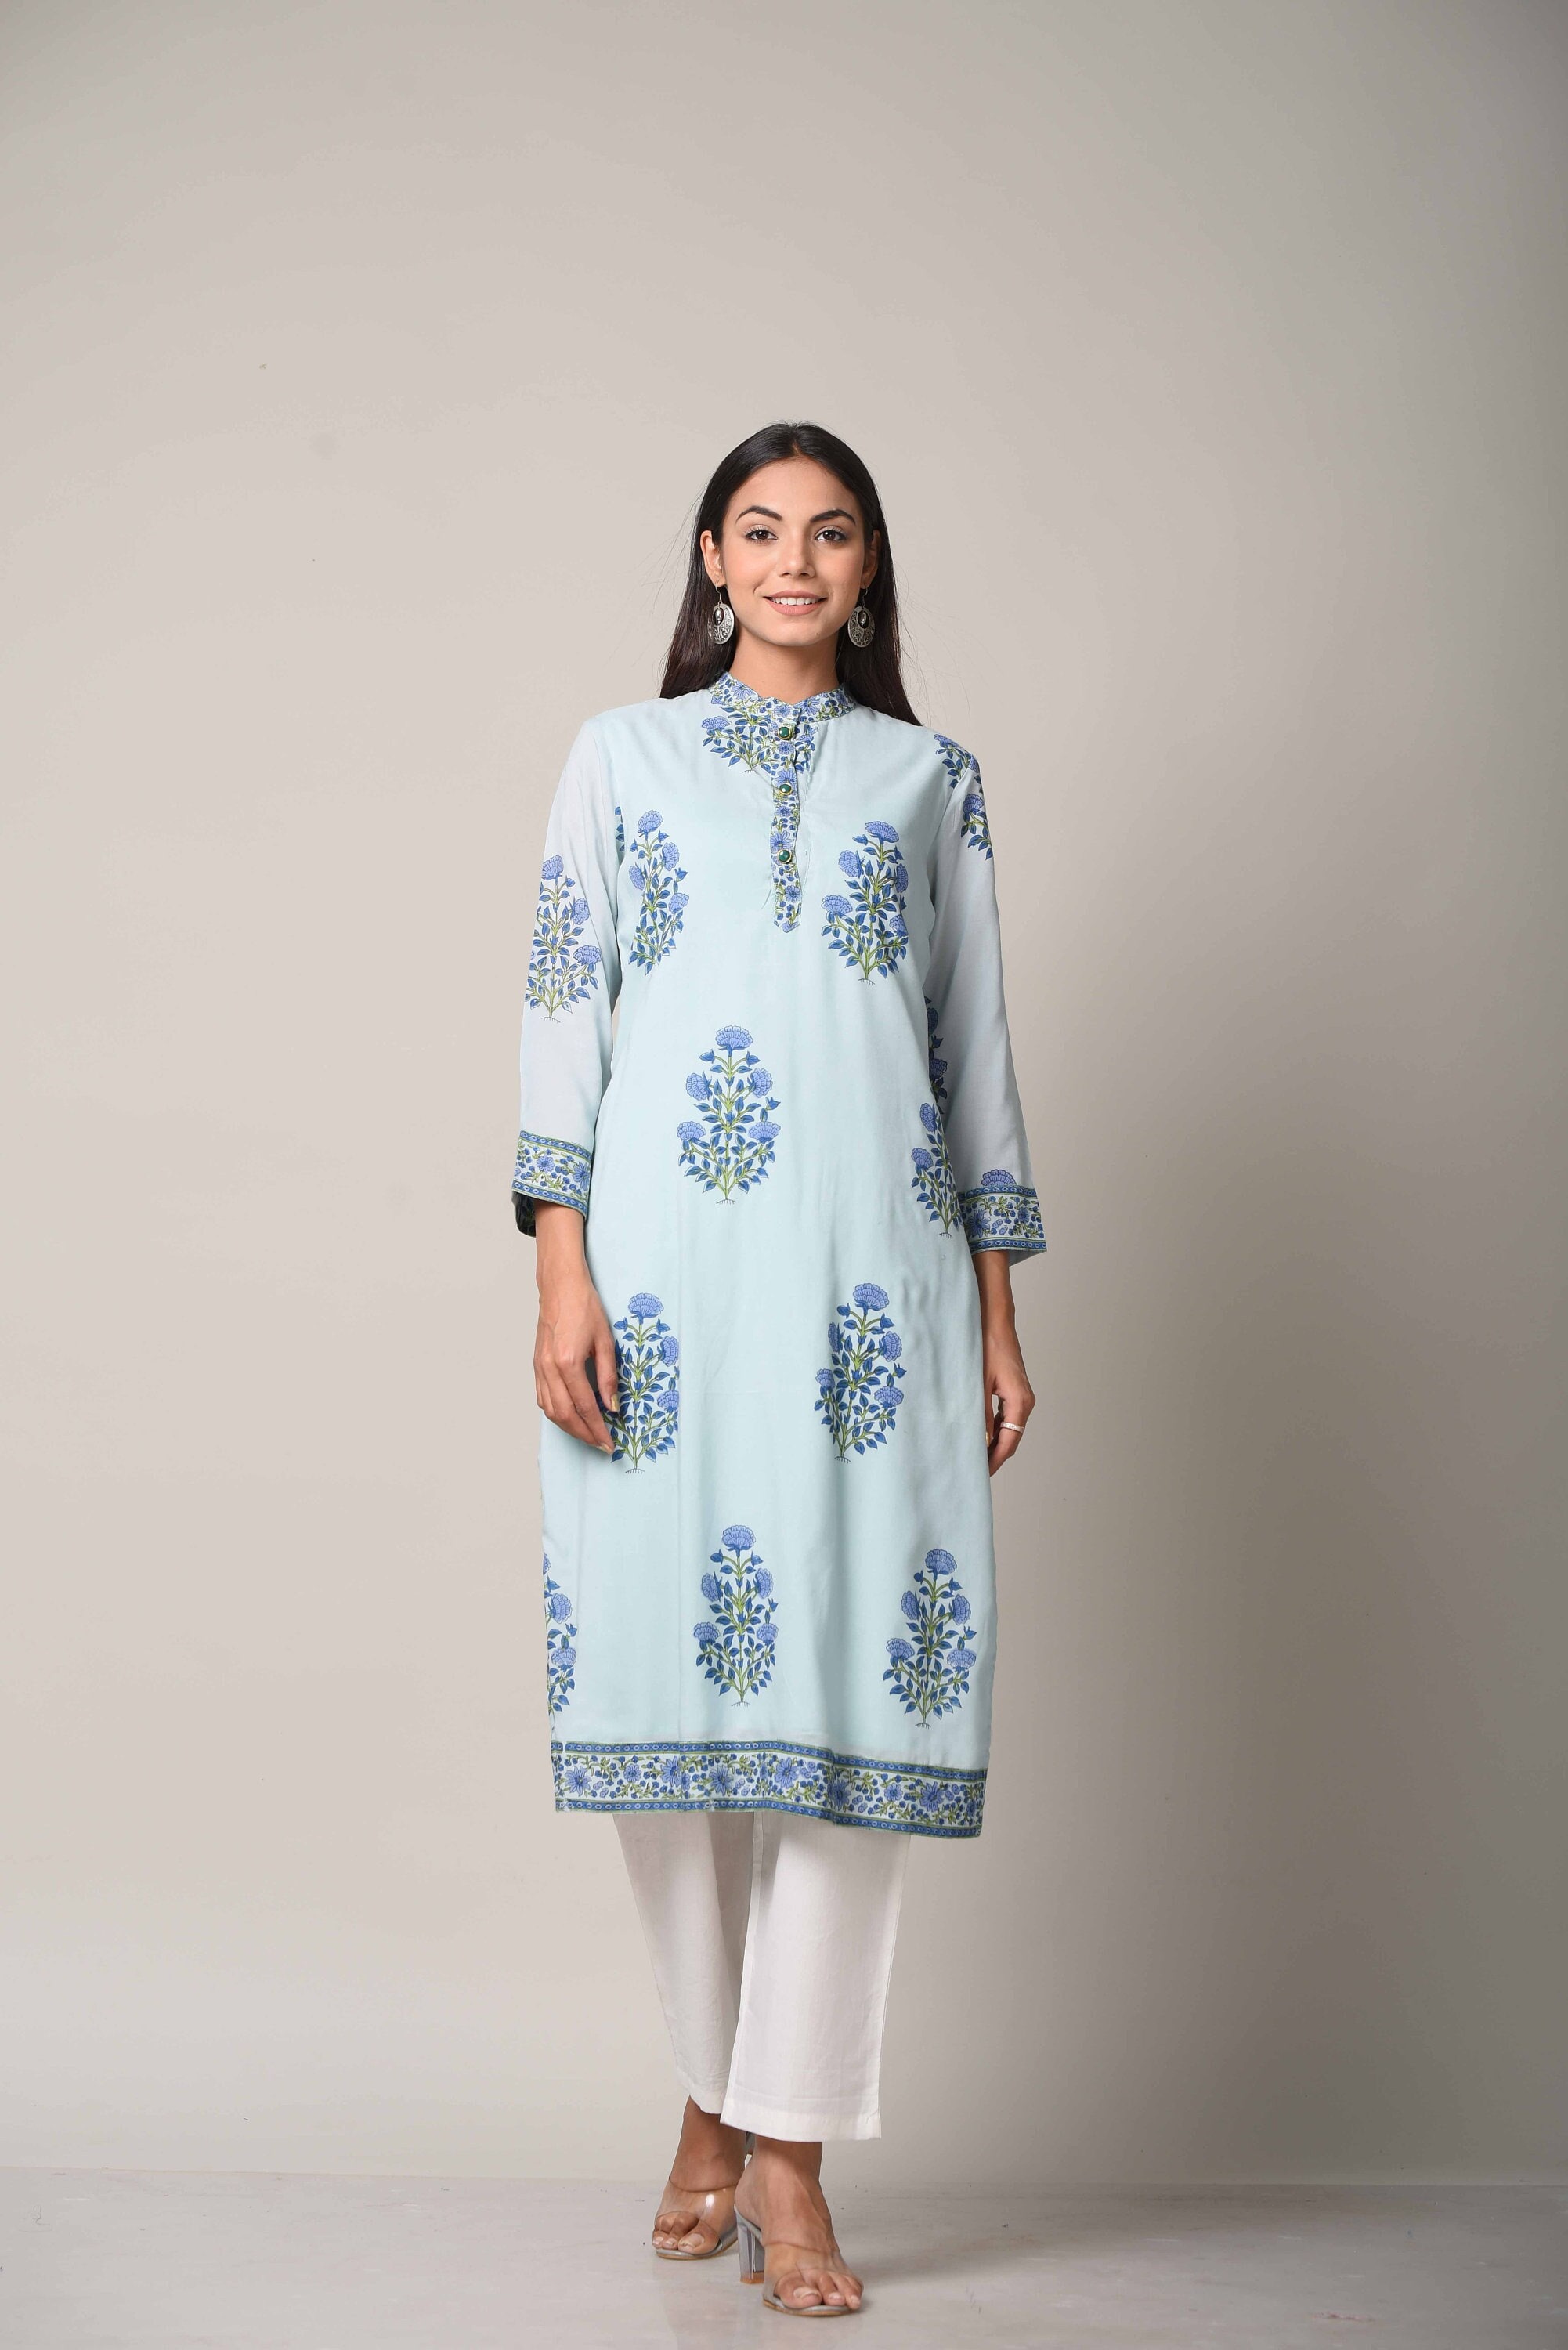 Buy Indigo Dabu Printed Cotton Kurta online at Theloom | Kurti designs,  Kurti neck designs, New kurti designs